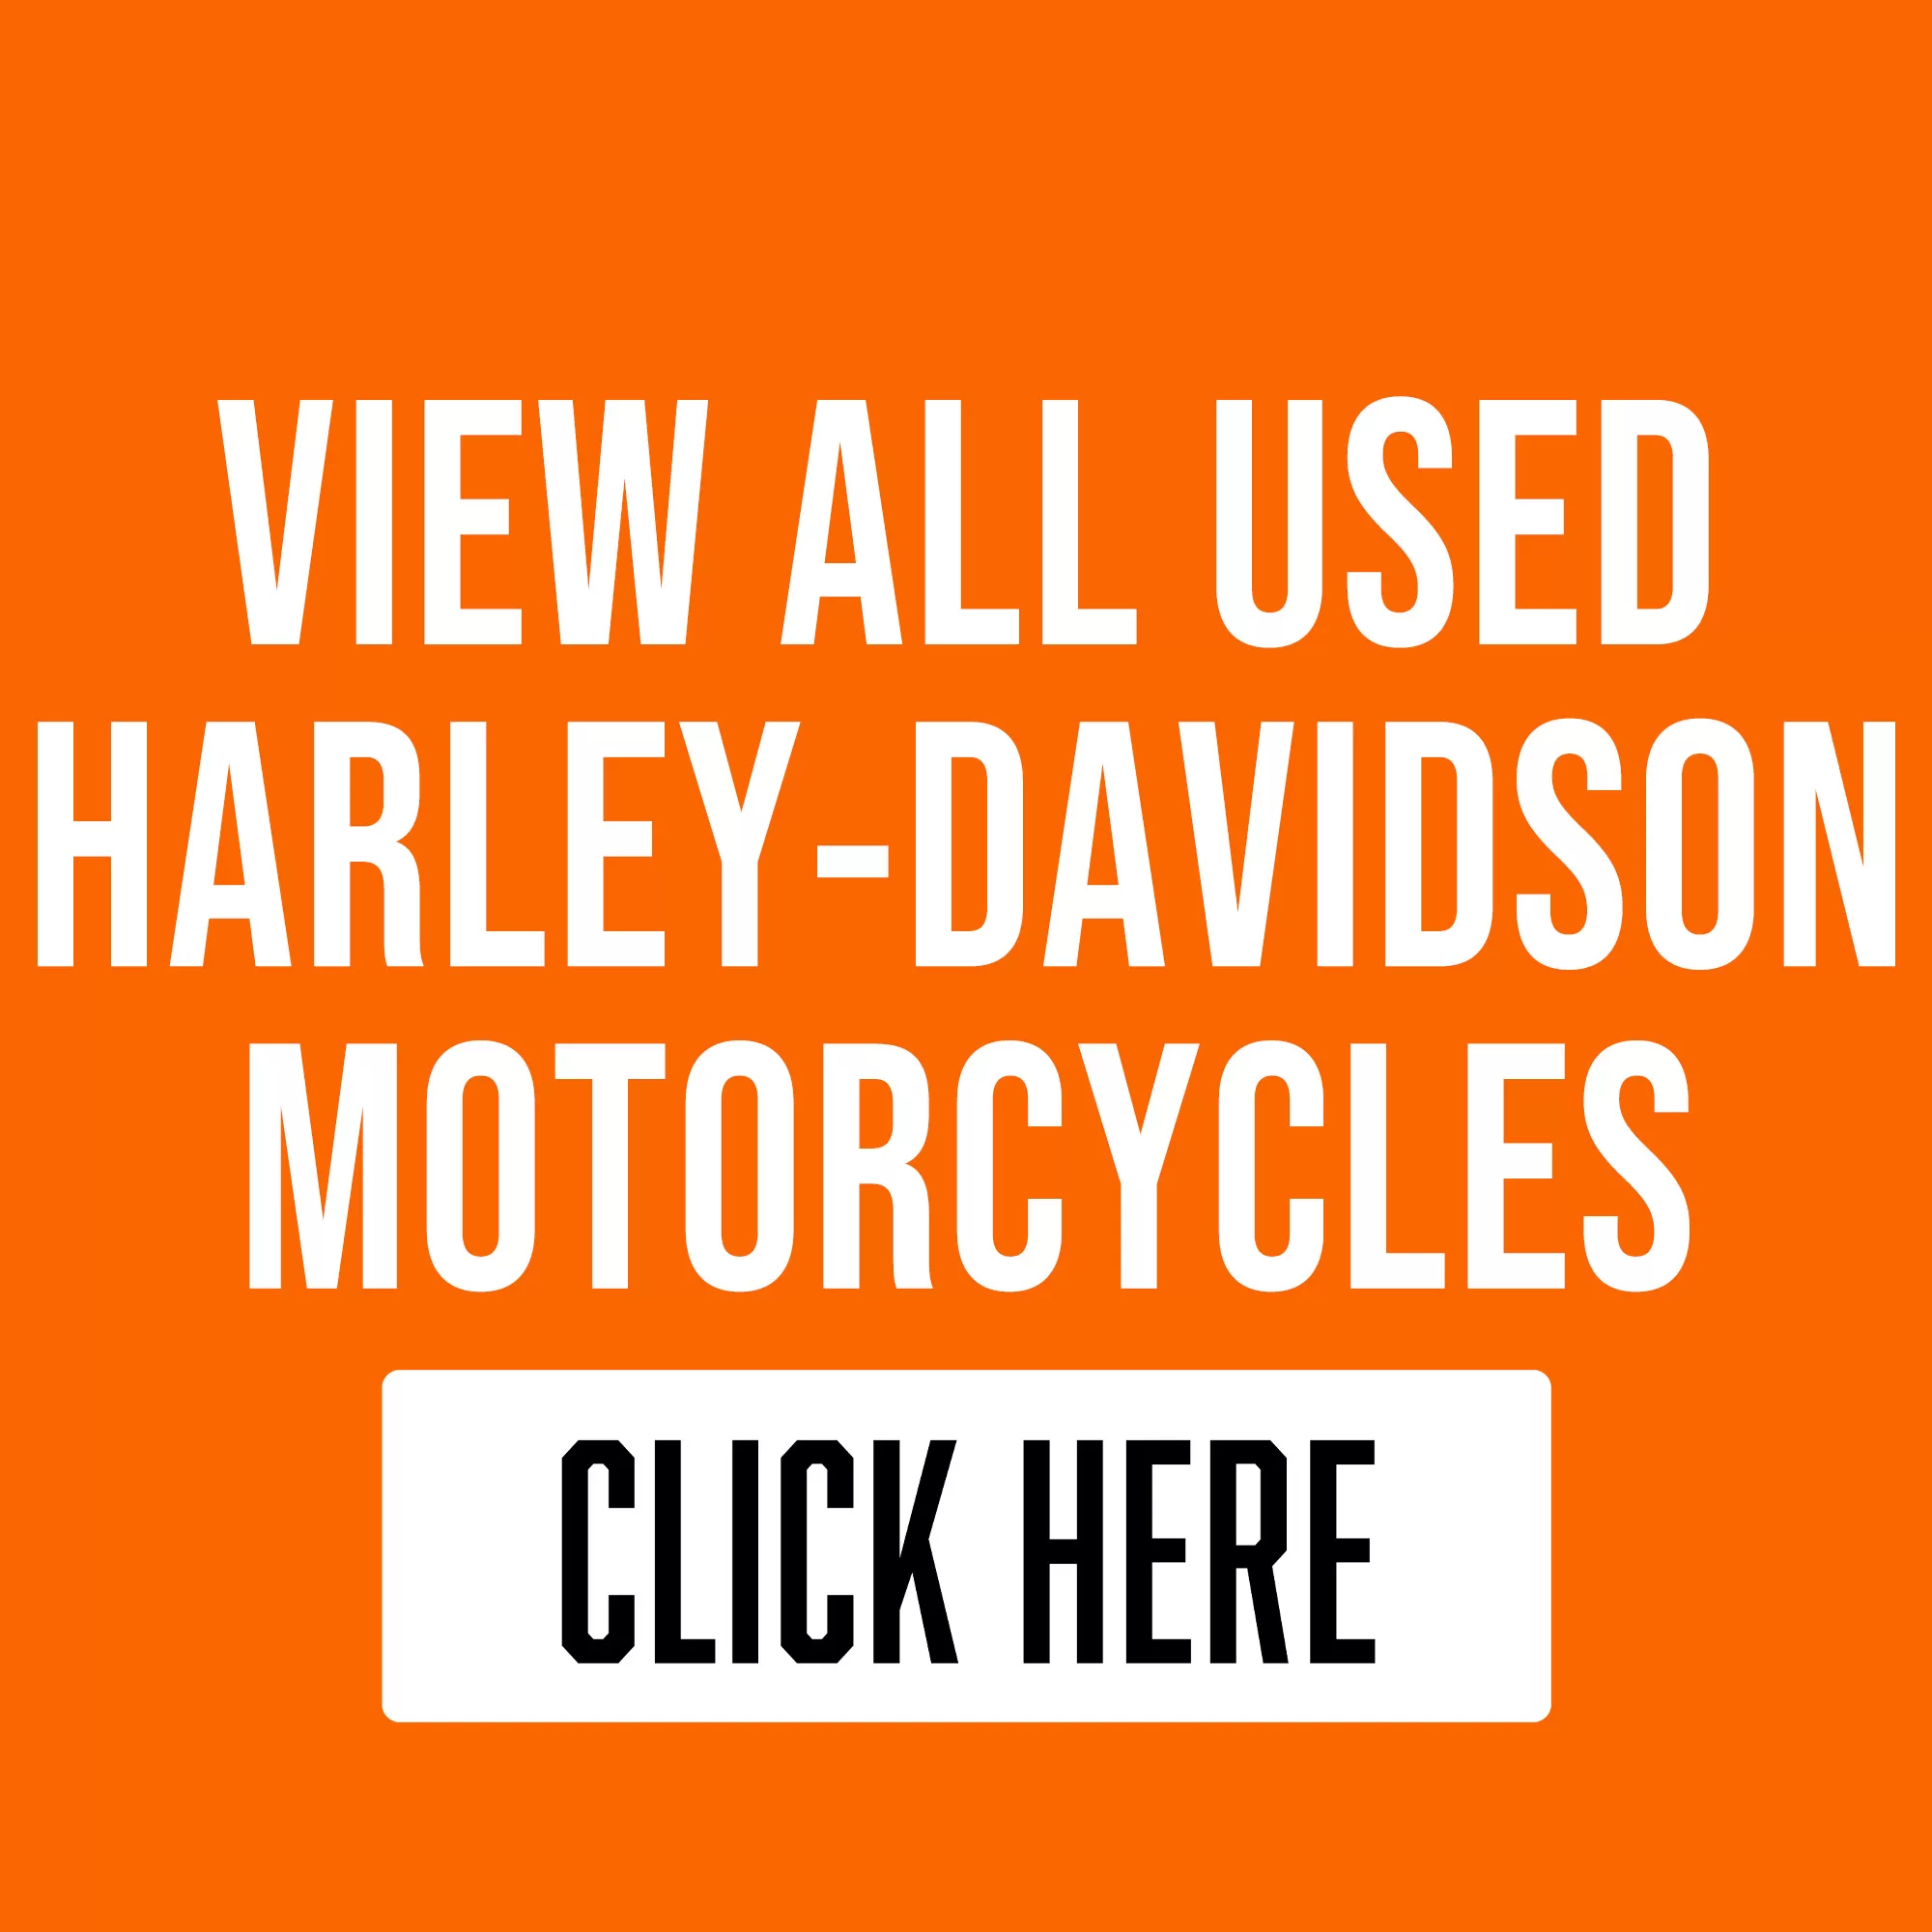 Used Harley-Davidson motorcycles